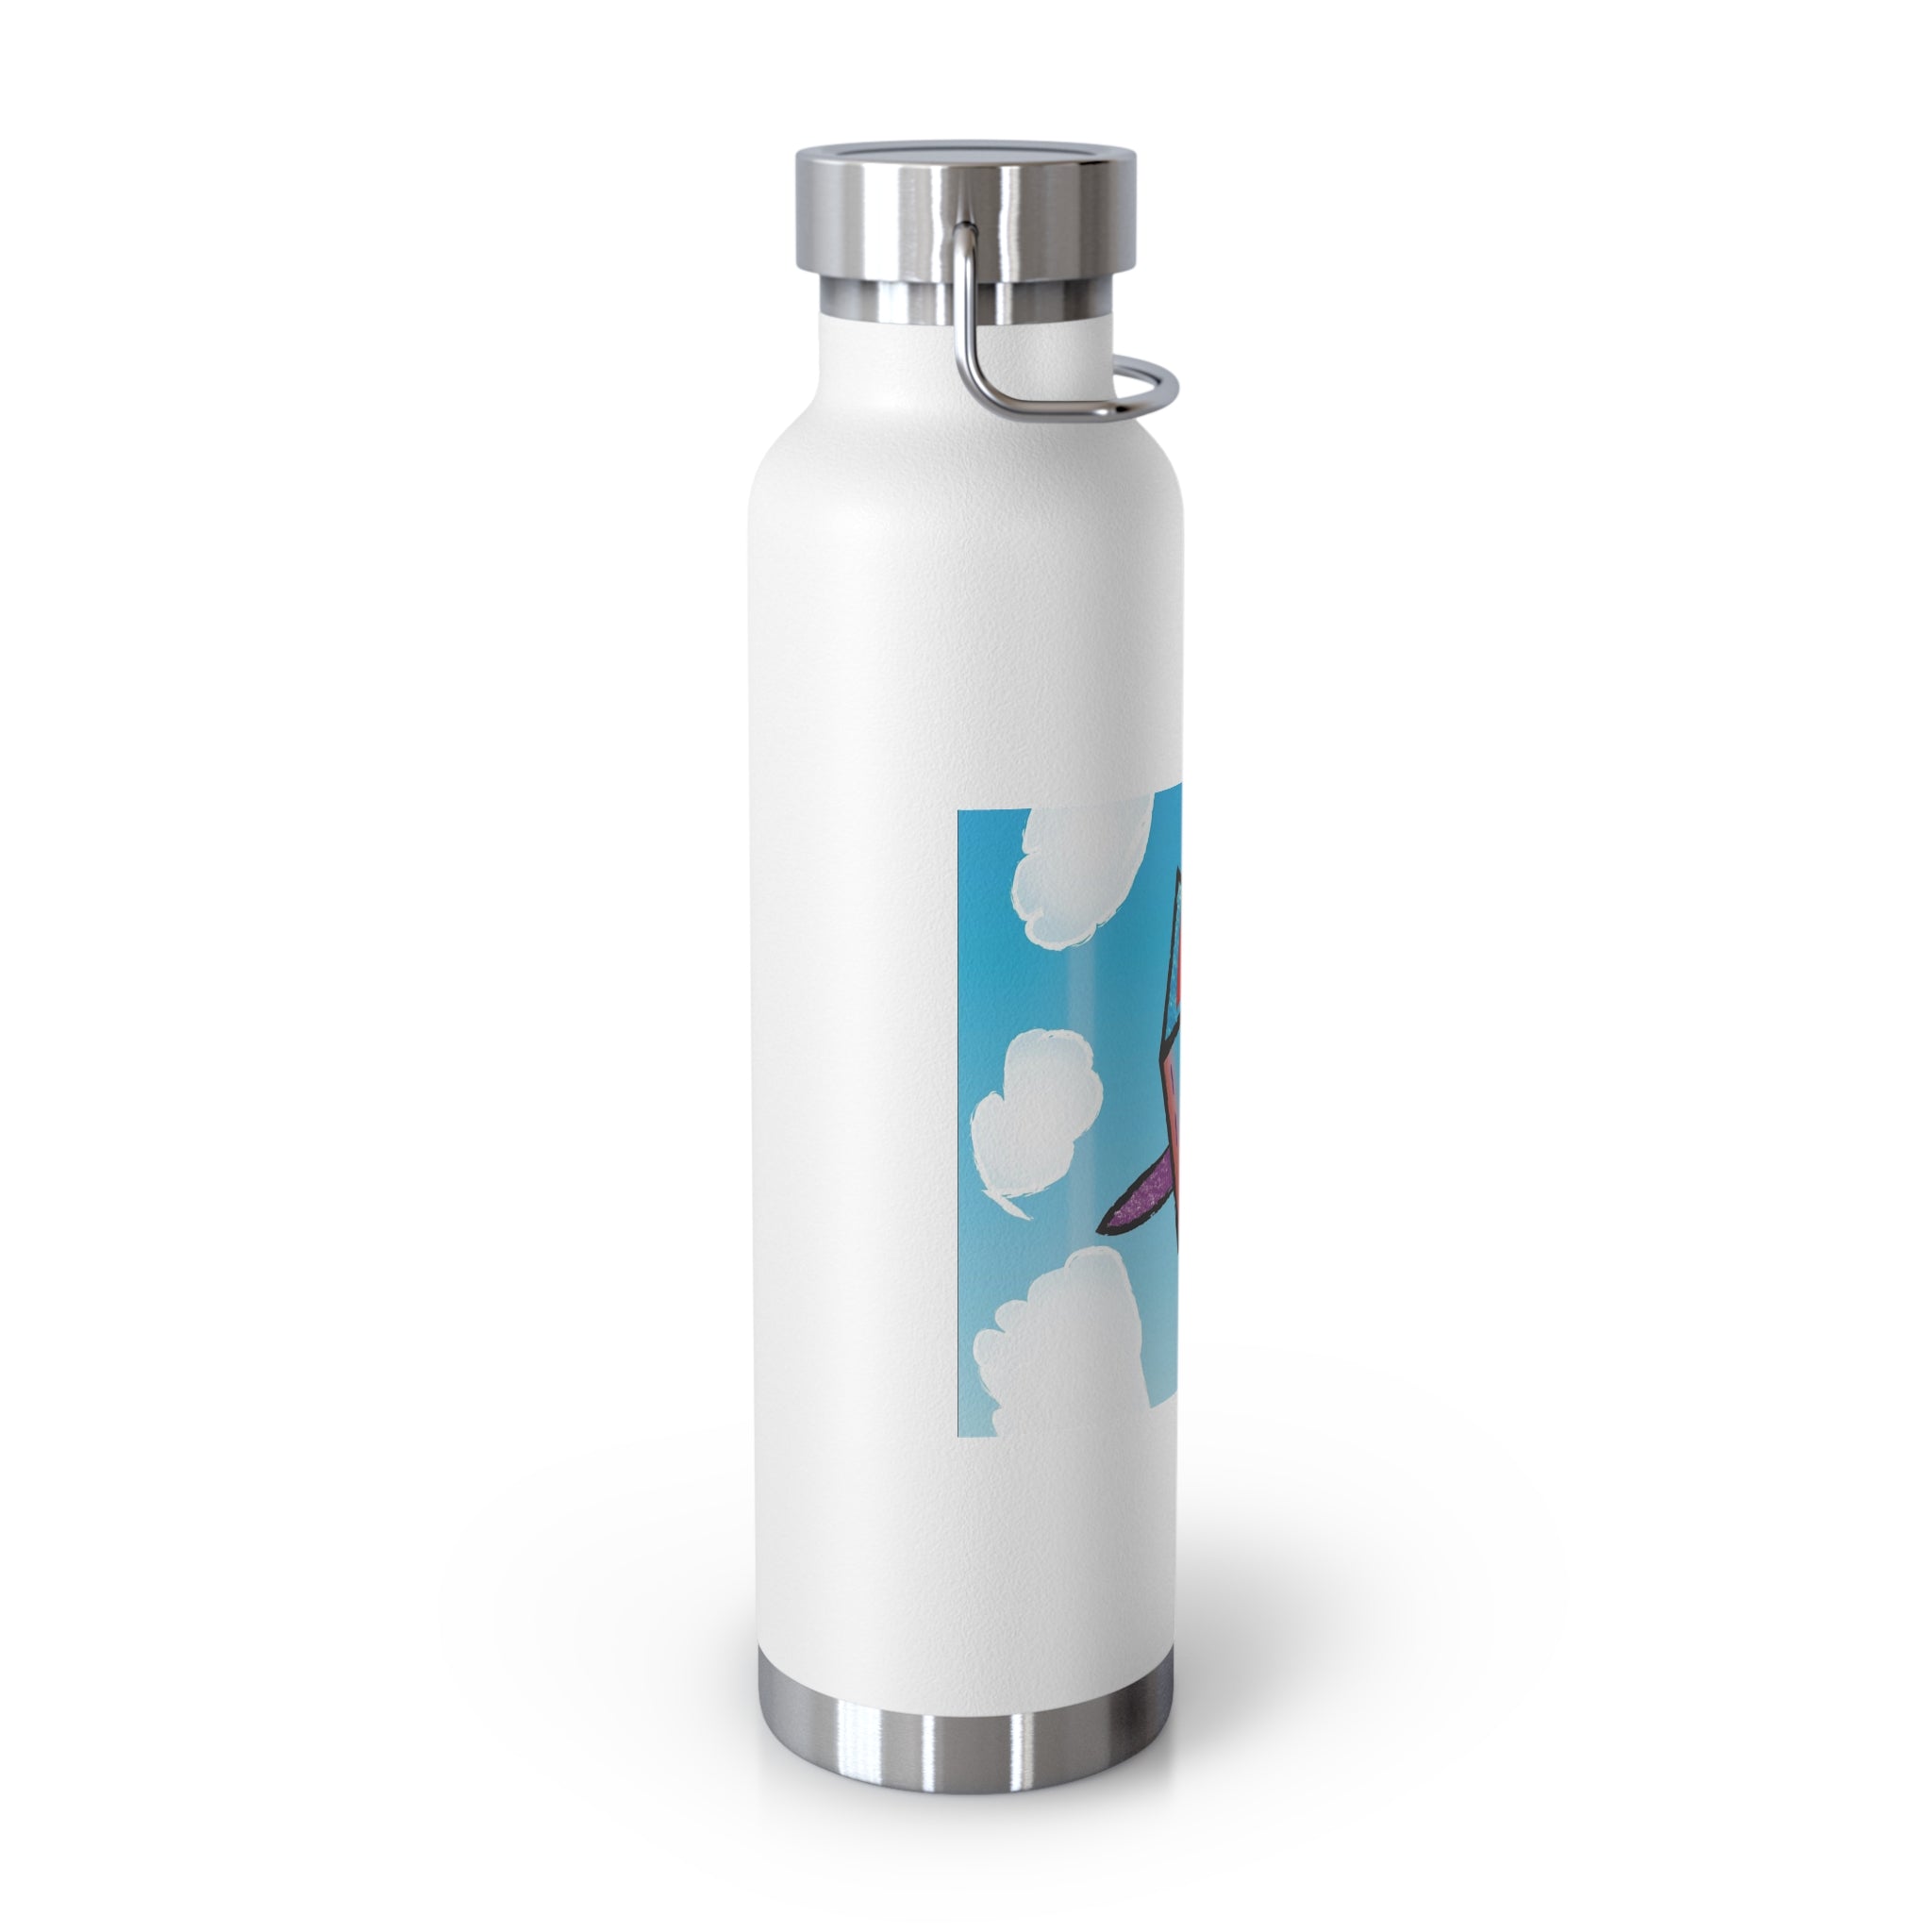 Sparkle Rocket - Copper Vacuum Insulated Bottle, 22oz